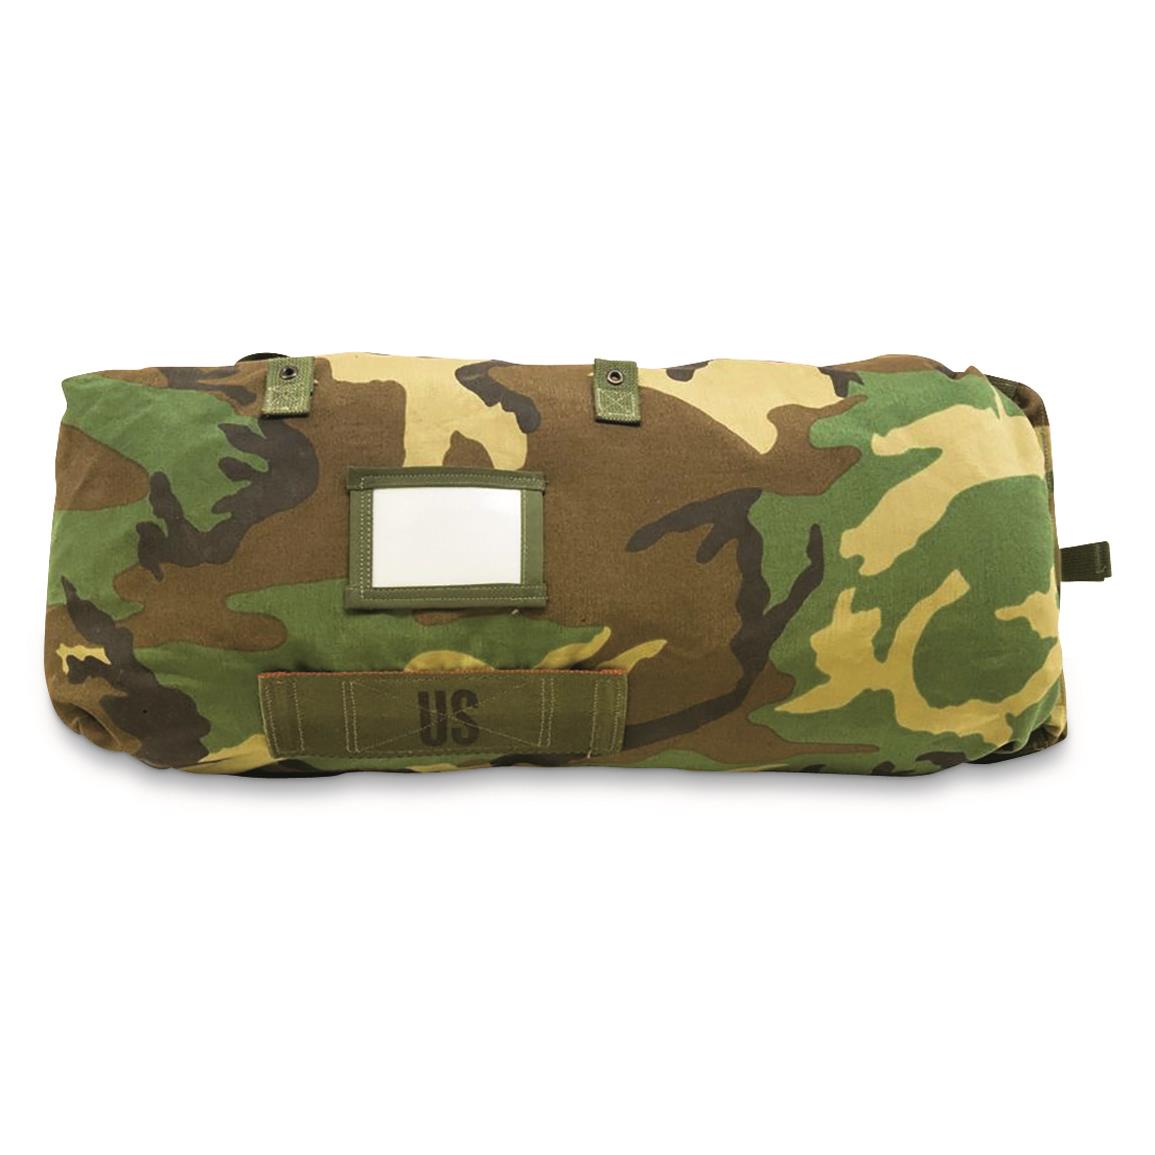 U.S. Military Surplus Protective Bag